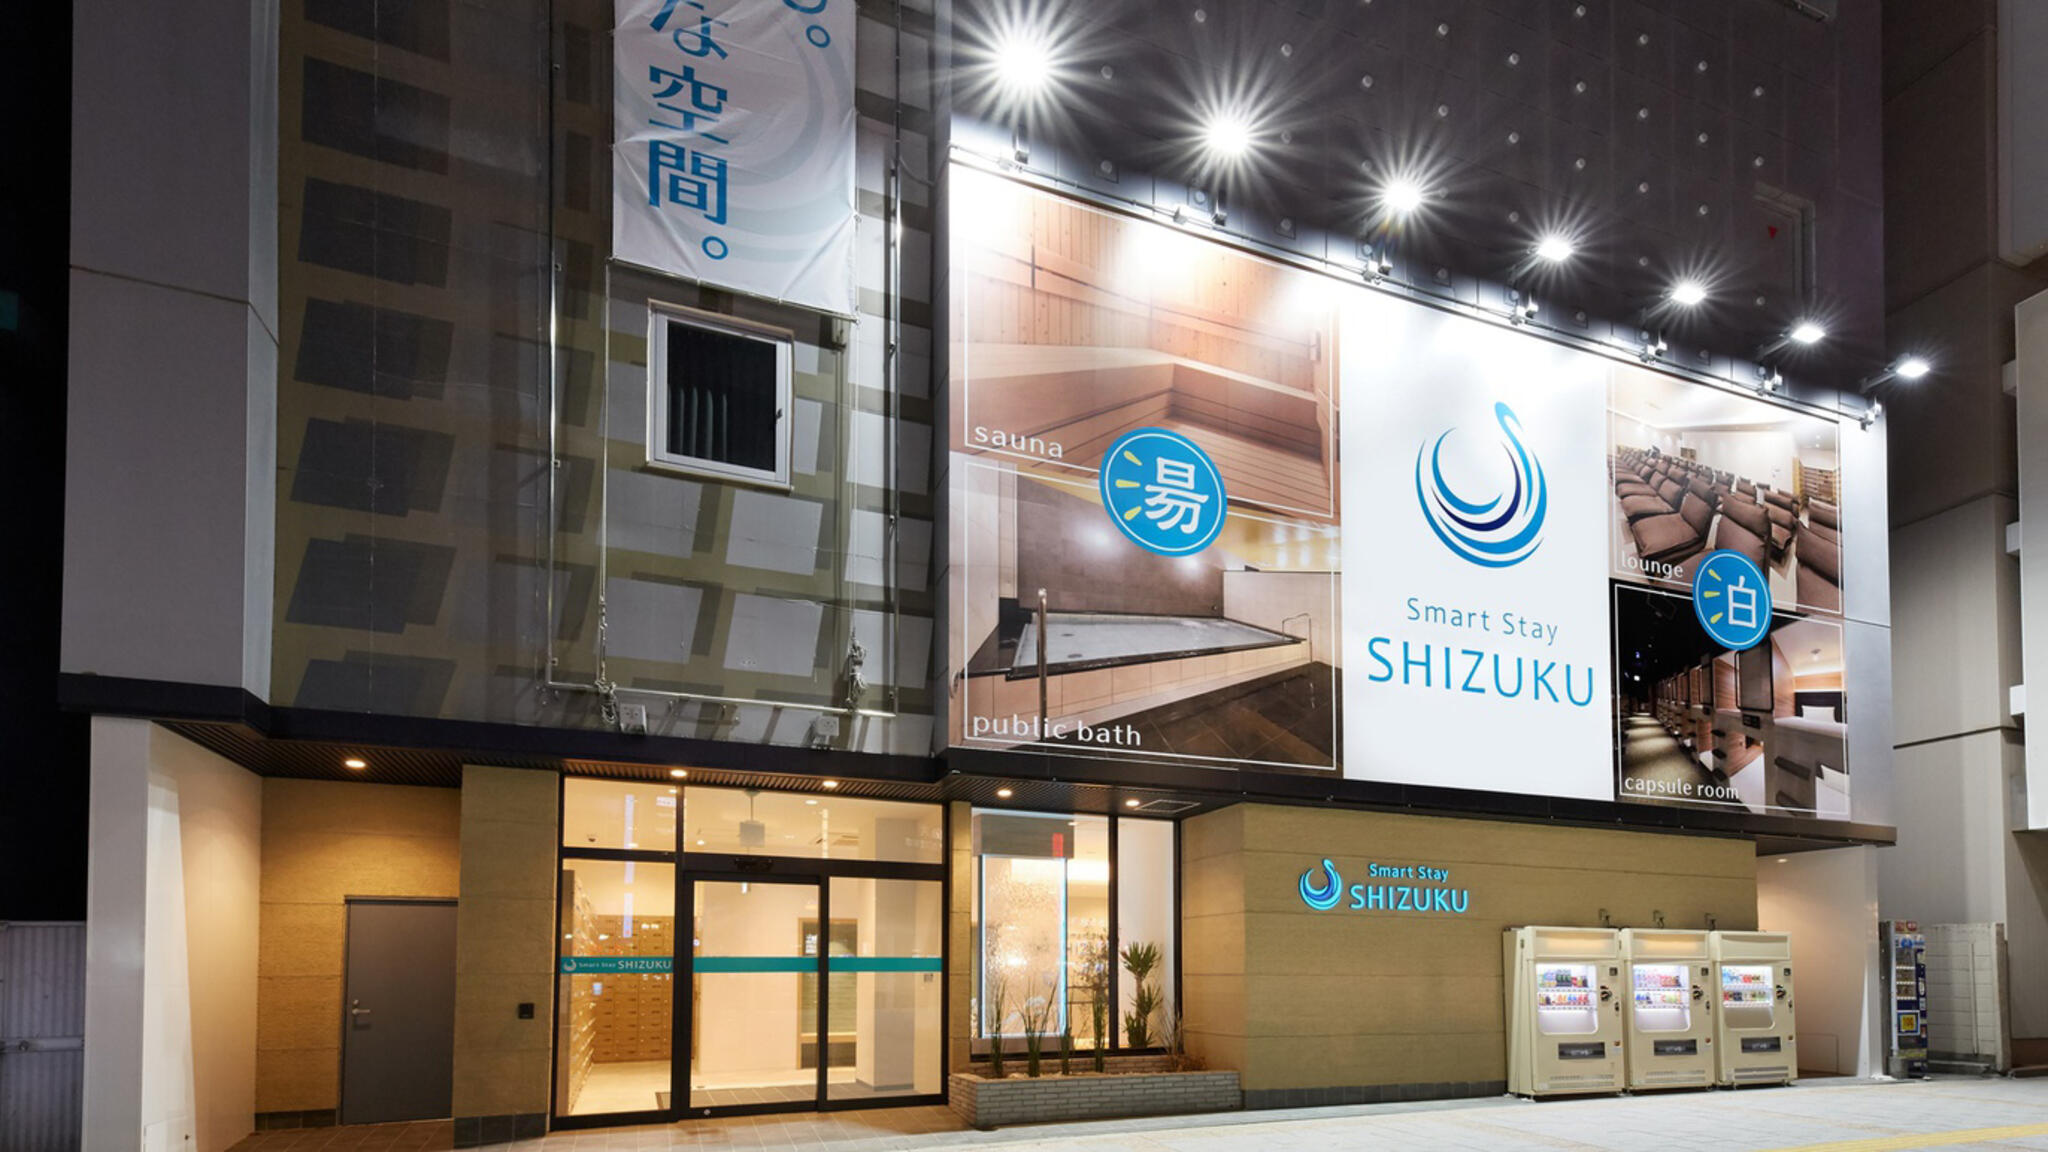 Smart Stay SHIZUKU 上野駅前の代表写真1